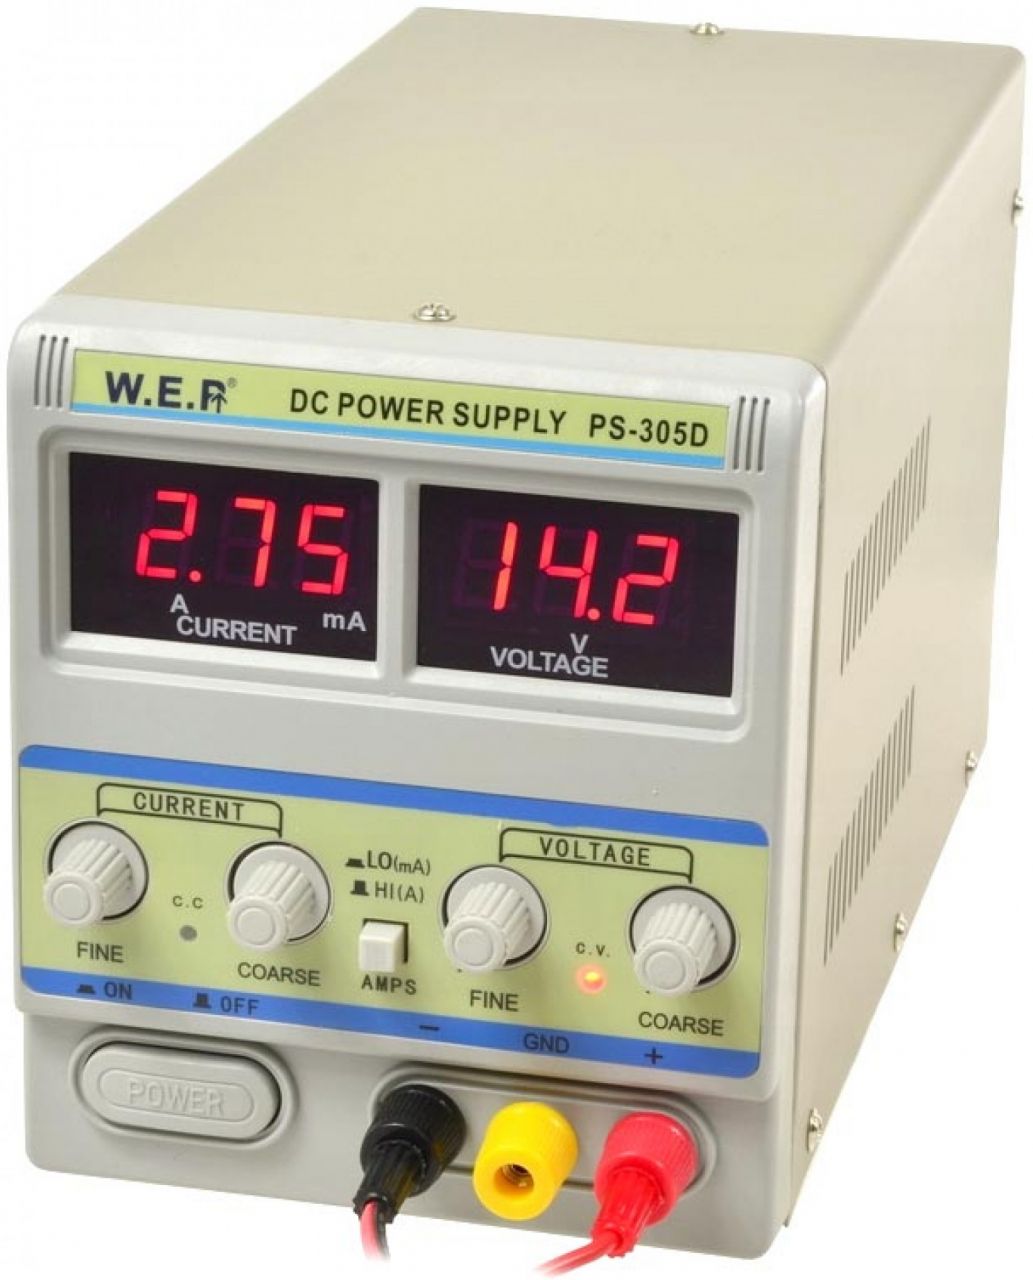 Лабораторный блок питания WEP PS-305D 30V, 5A с переключателем Hi (A)/Lo (mA) / изоборажение №1